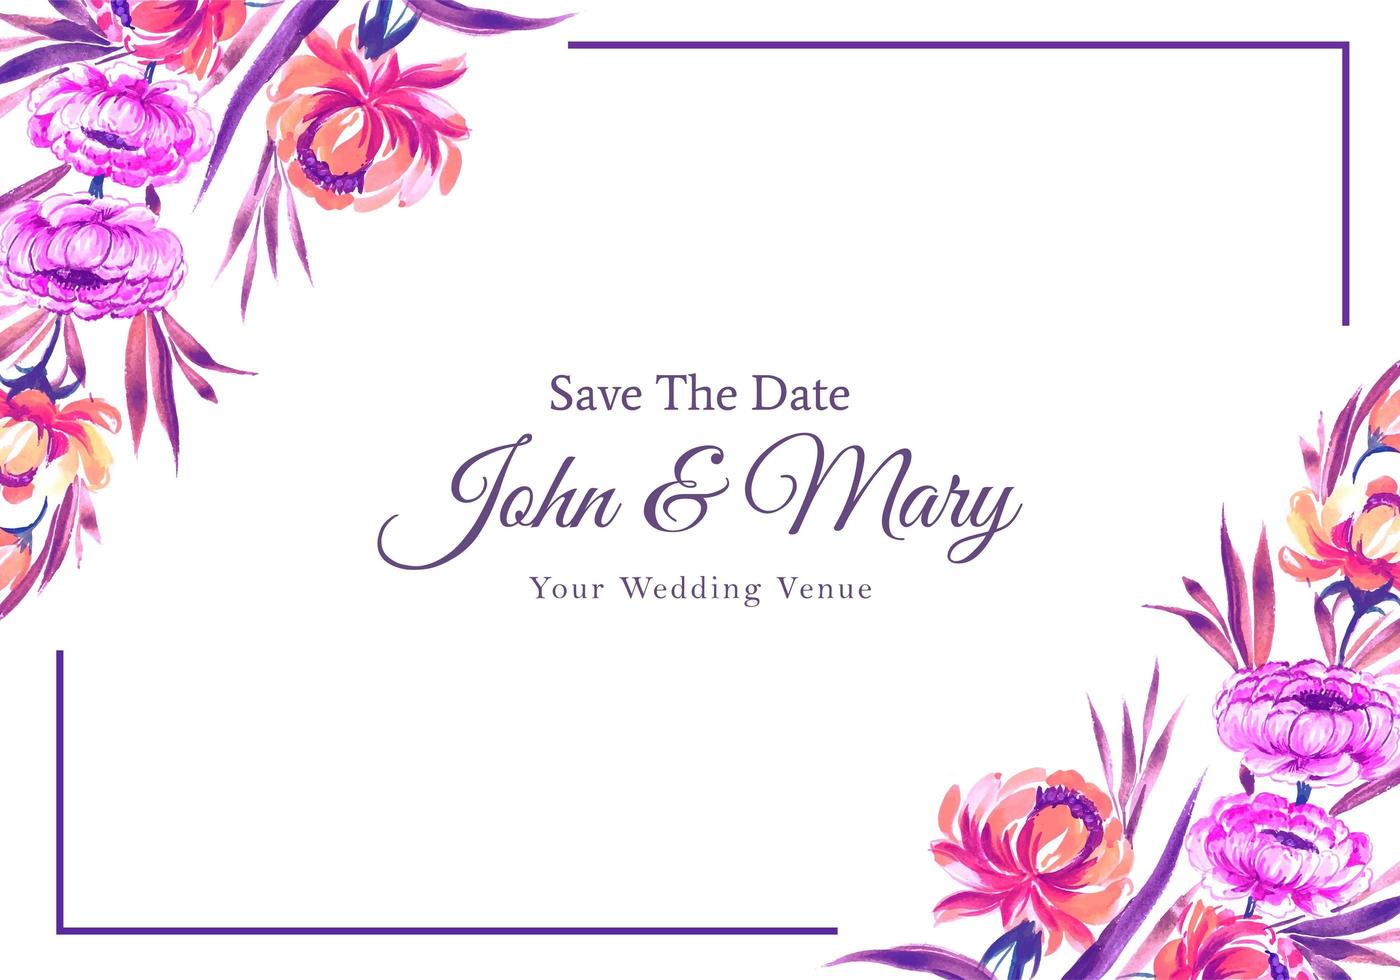 Wedding invitation colorful flowers frame card design